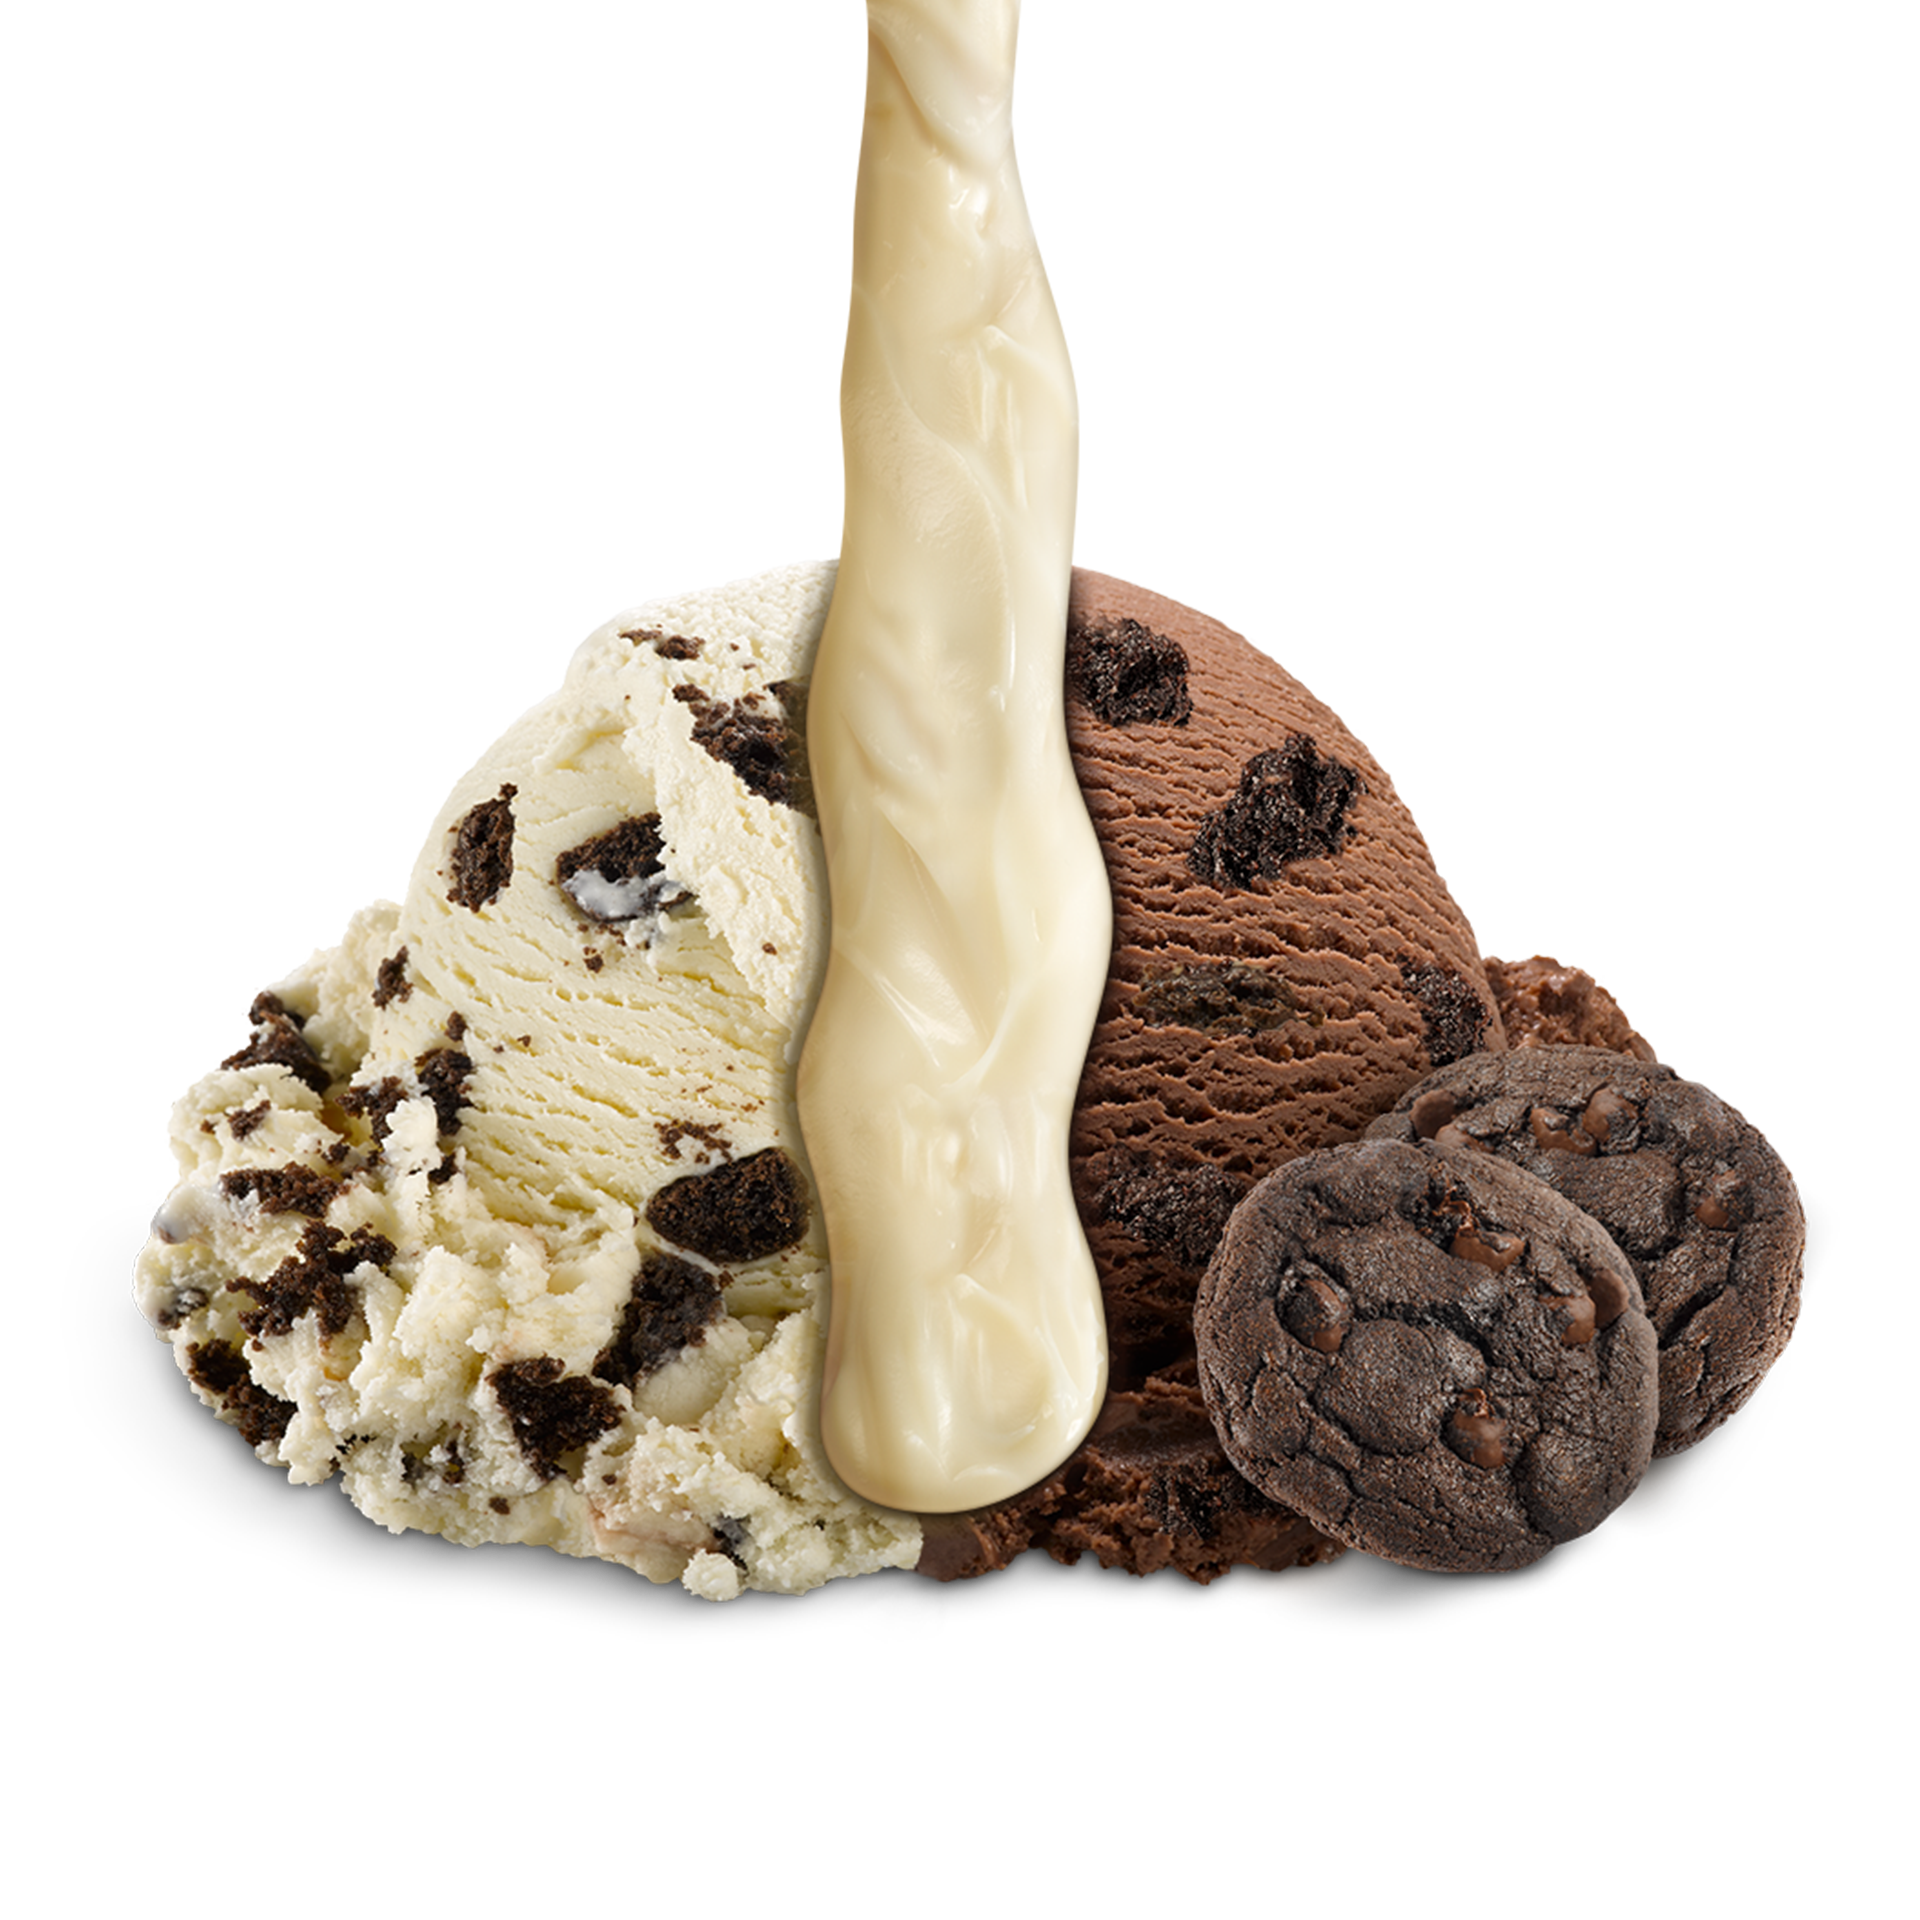 Scoop of Ice Cream with ingredients